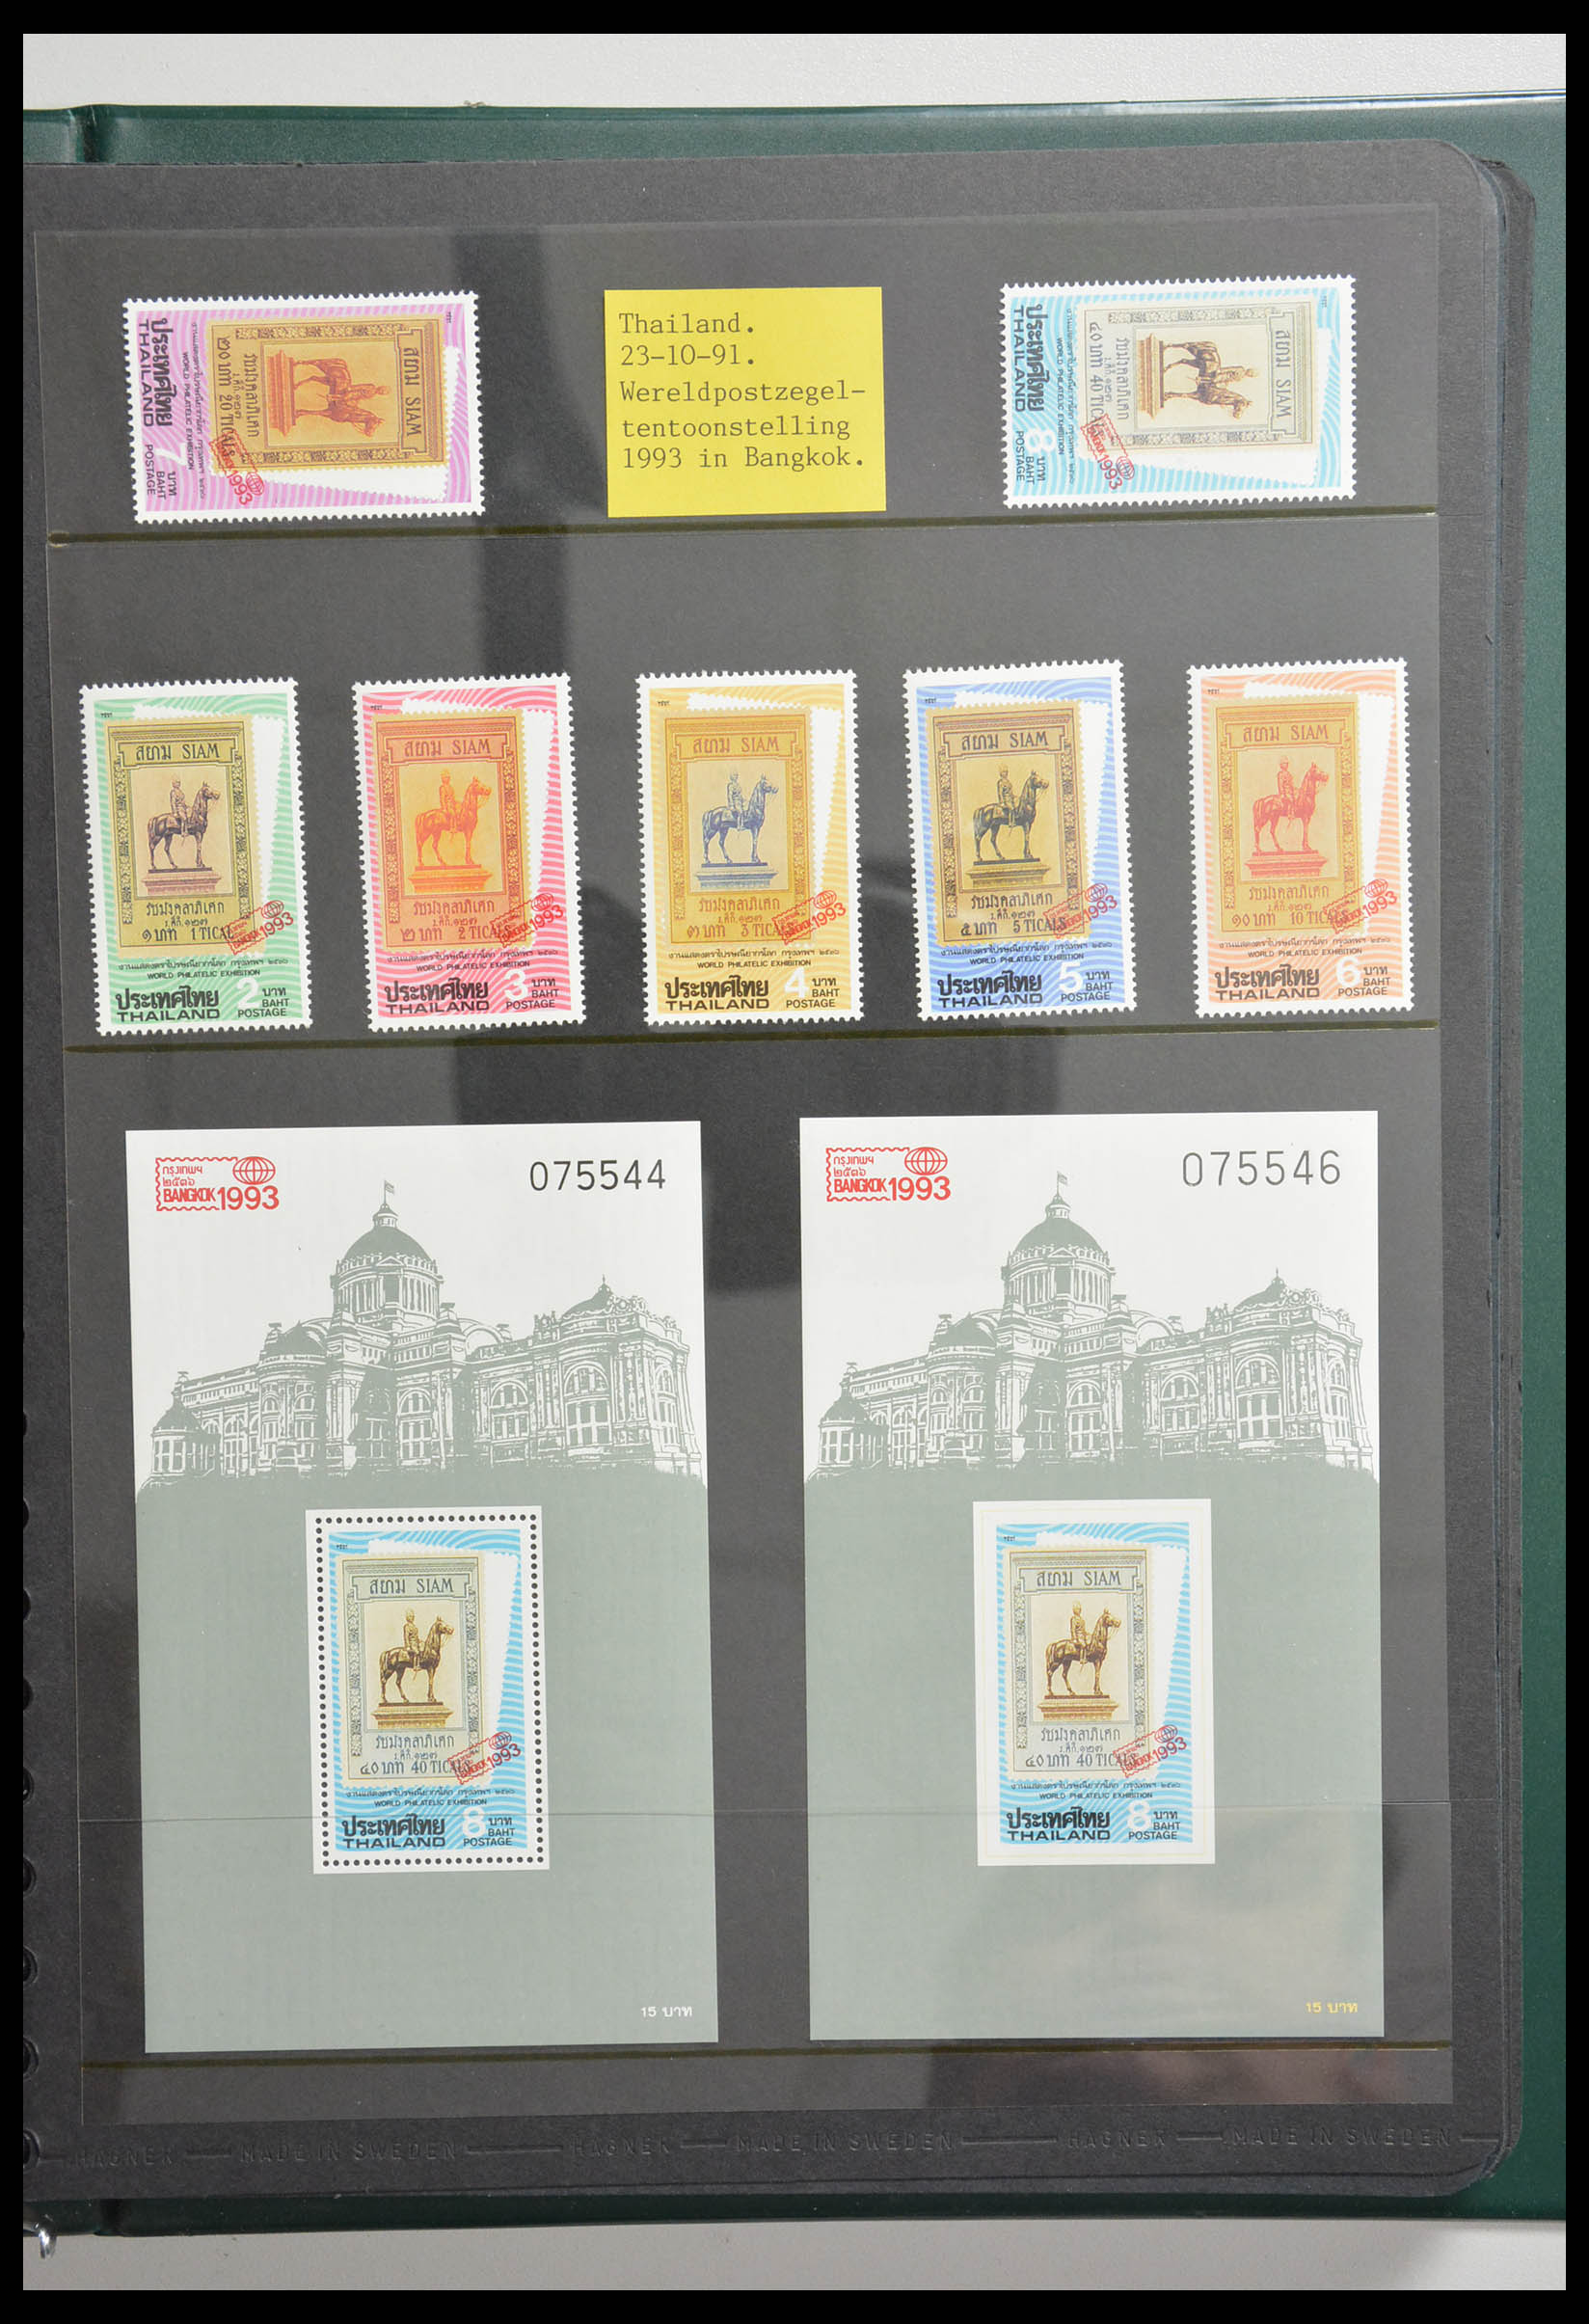 28337 094 - 28337 Postzegel op postzegel 1840-2001.